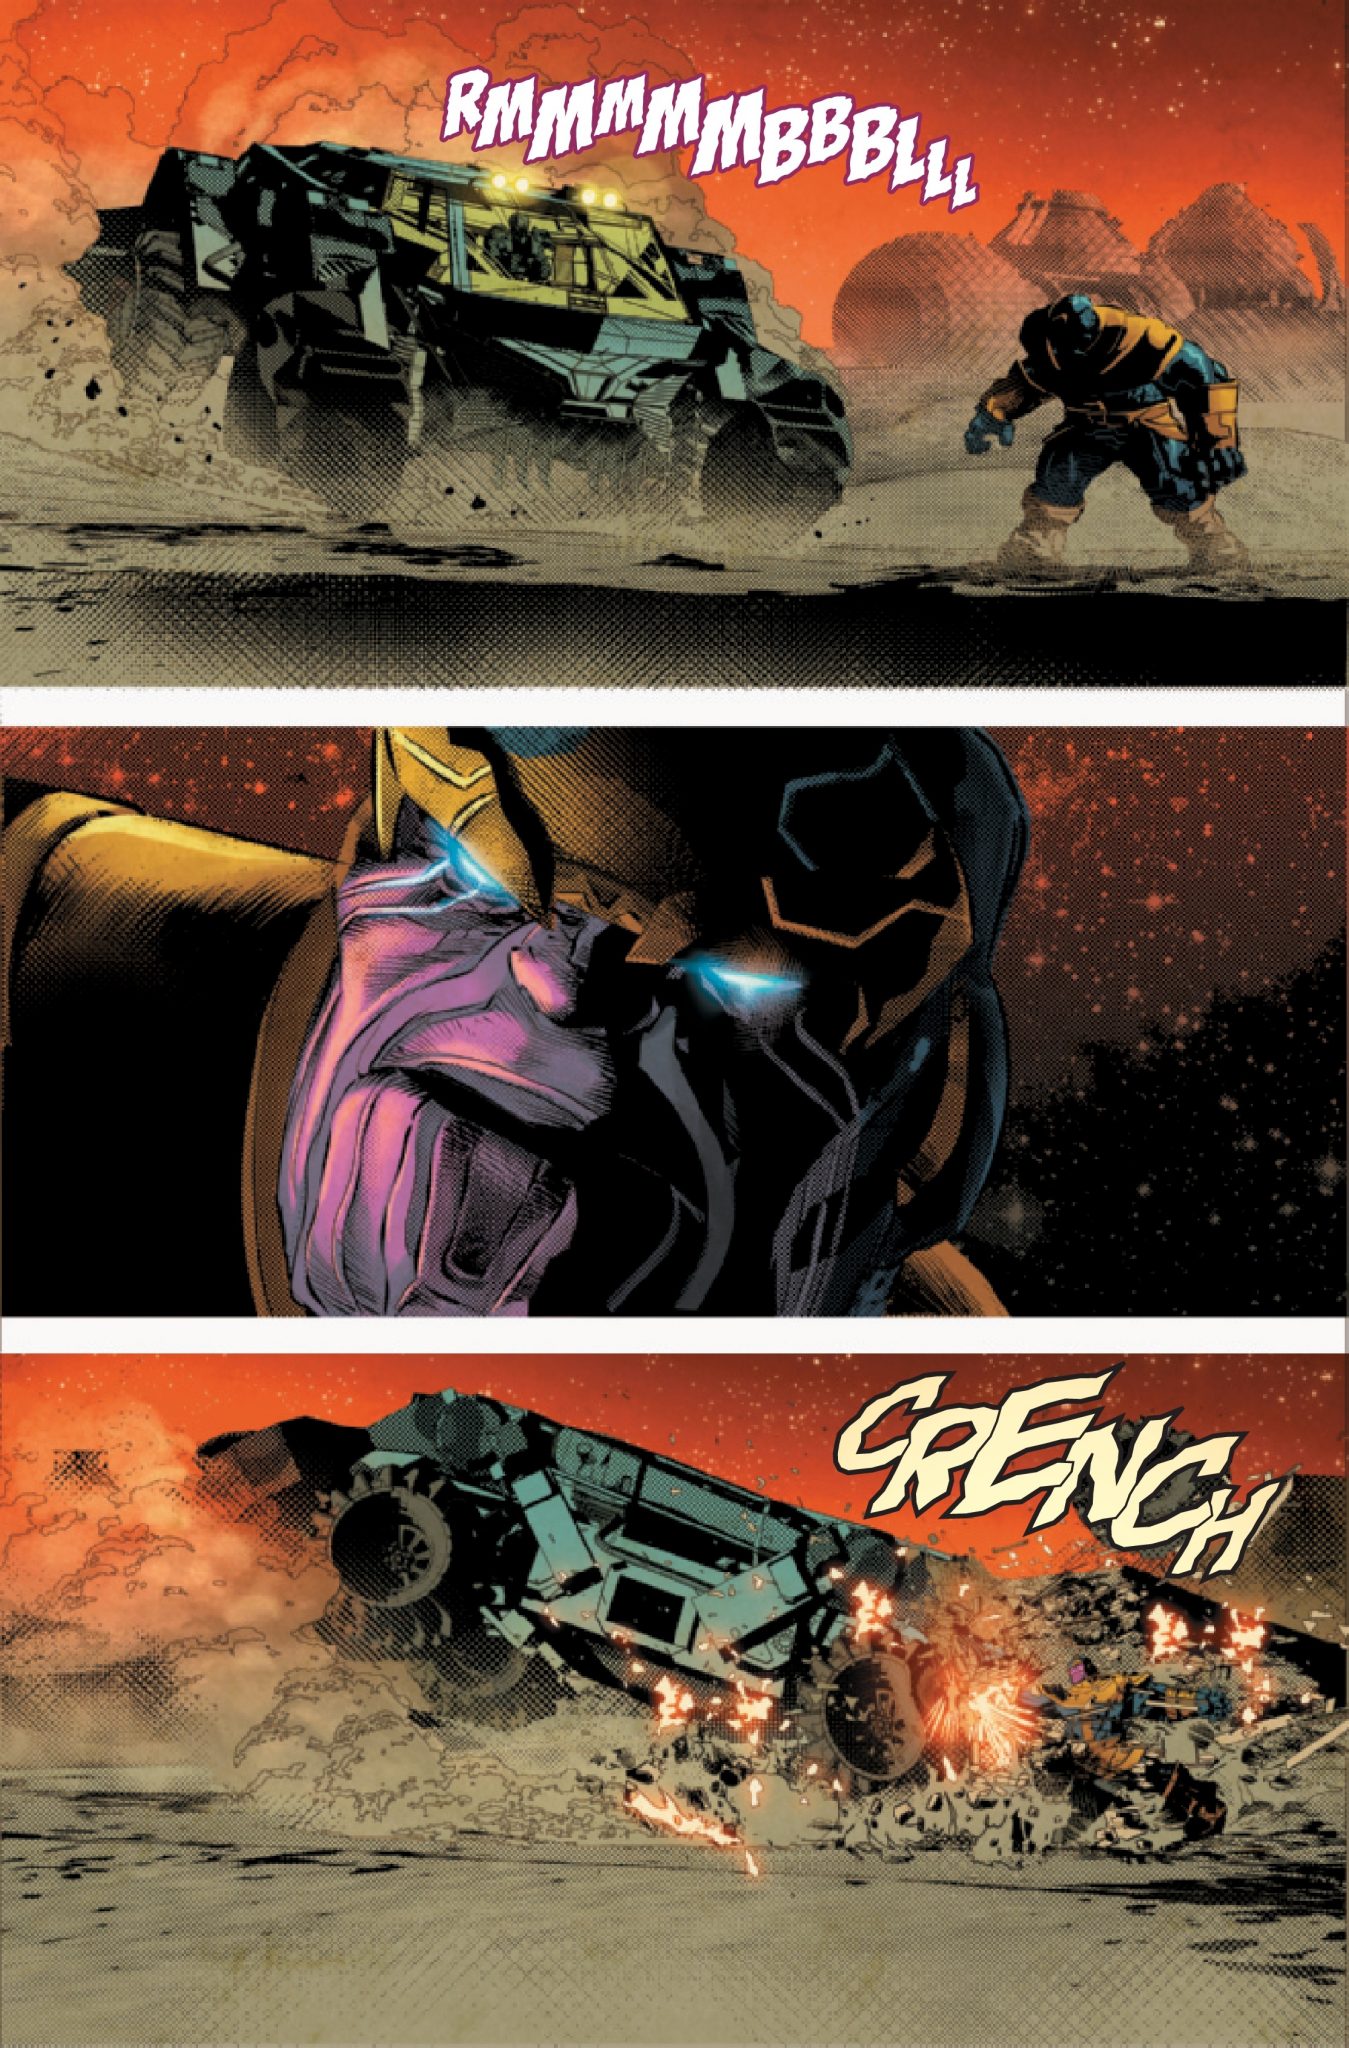 Thanos #1 - Marvel Comics - Blog Farofeiros